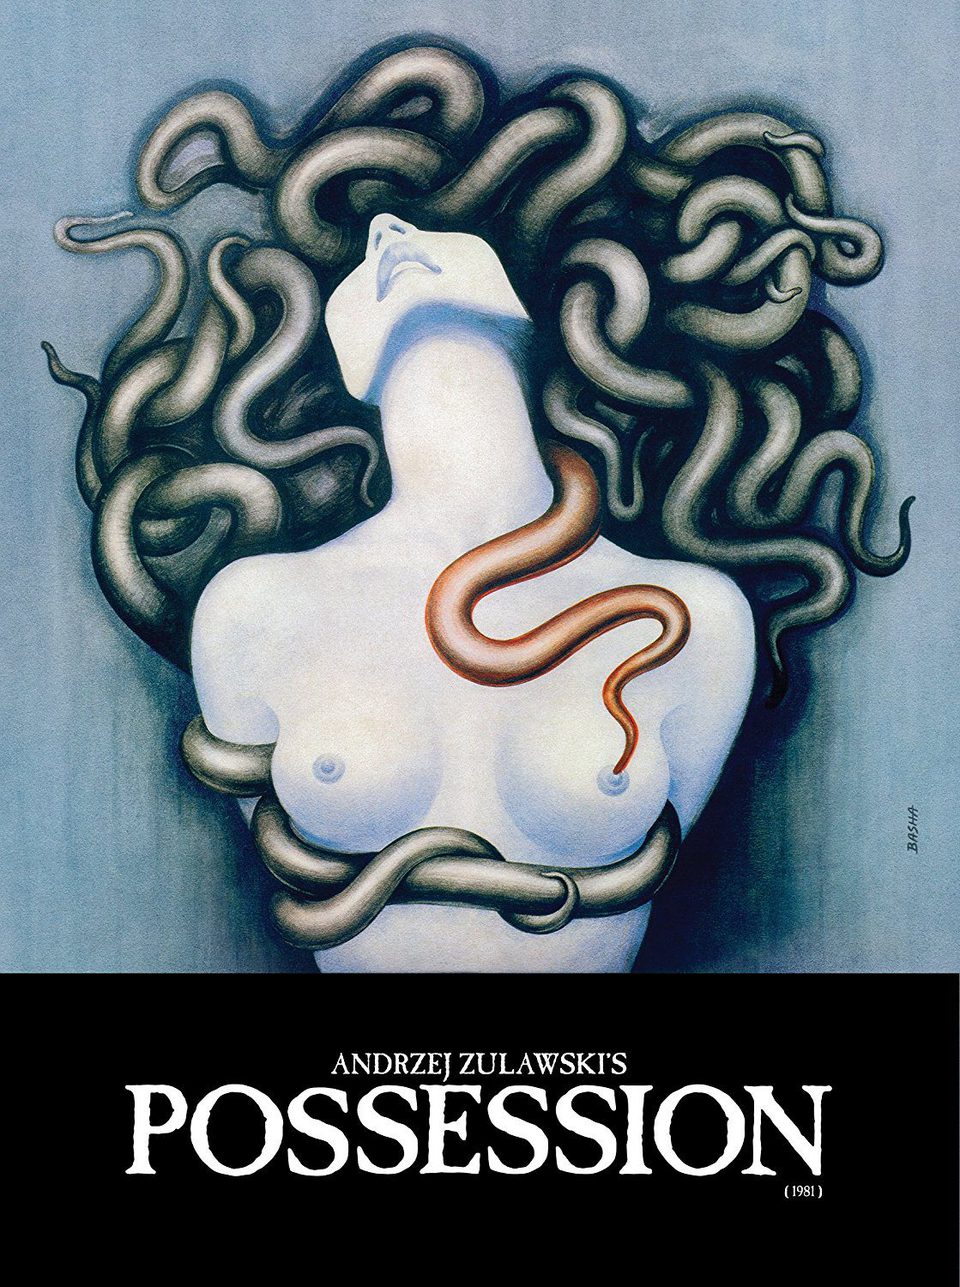 Cartel de Possession - La posesión